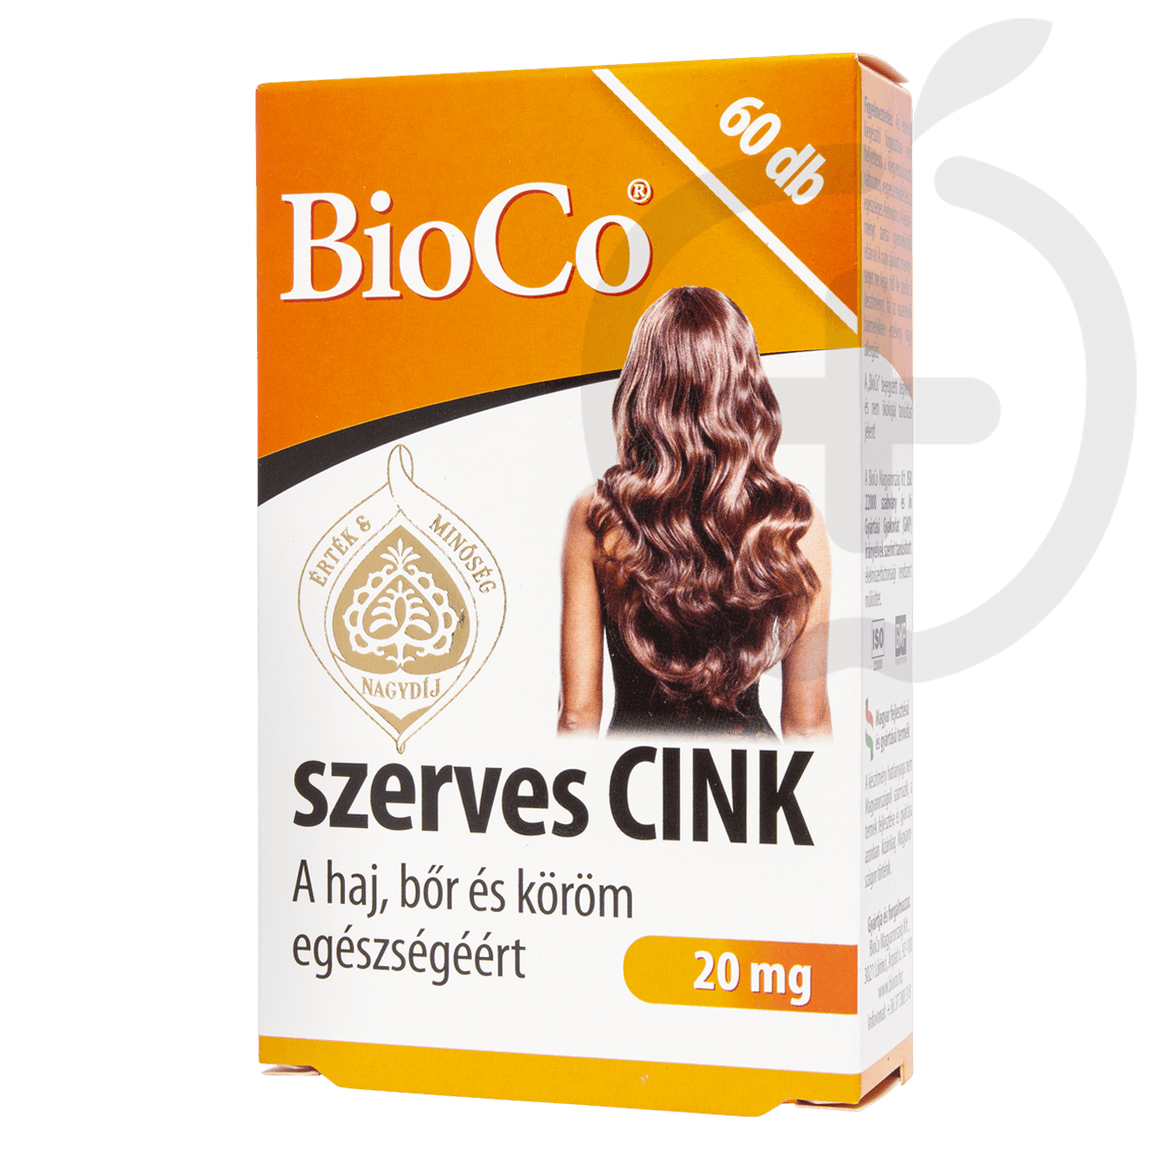 BioCo szerves Cink tabletta